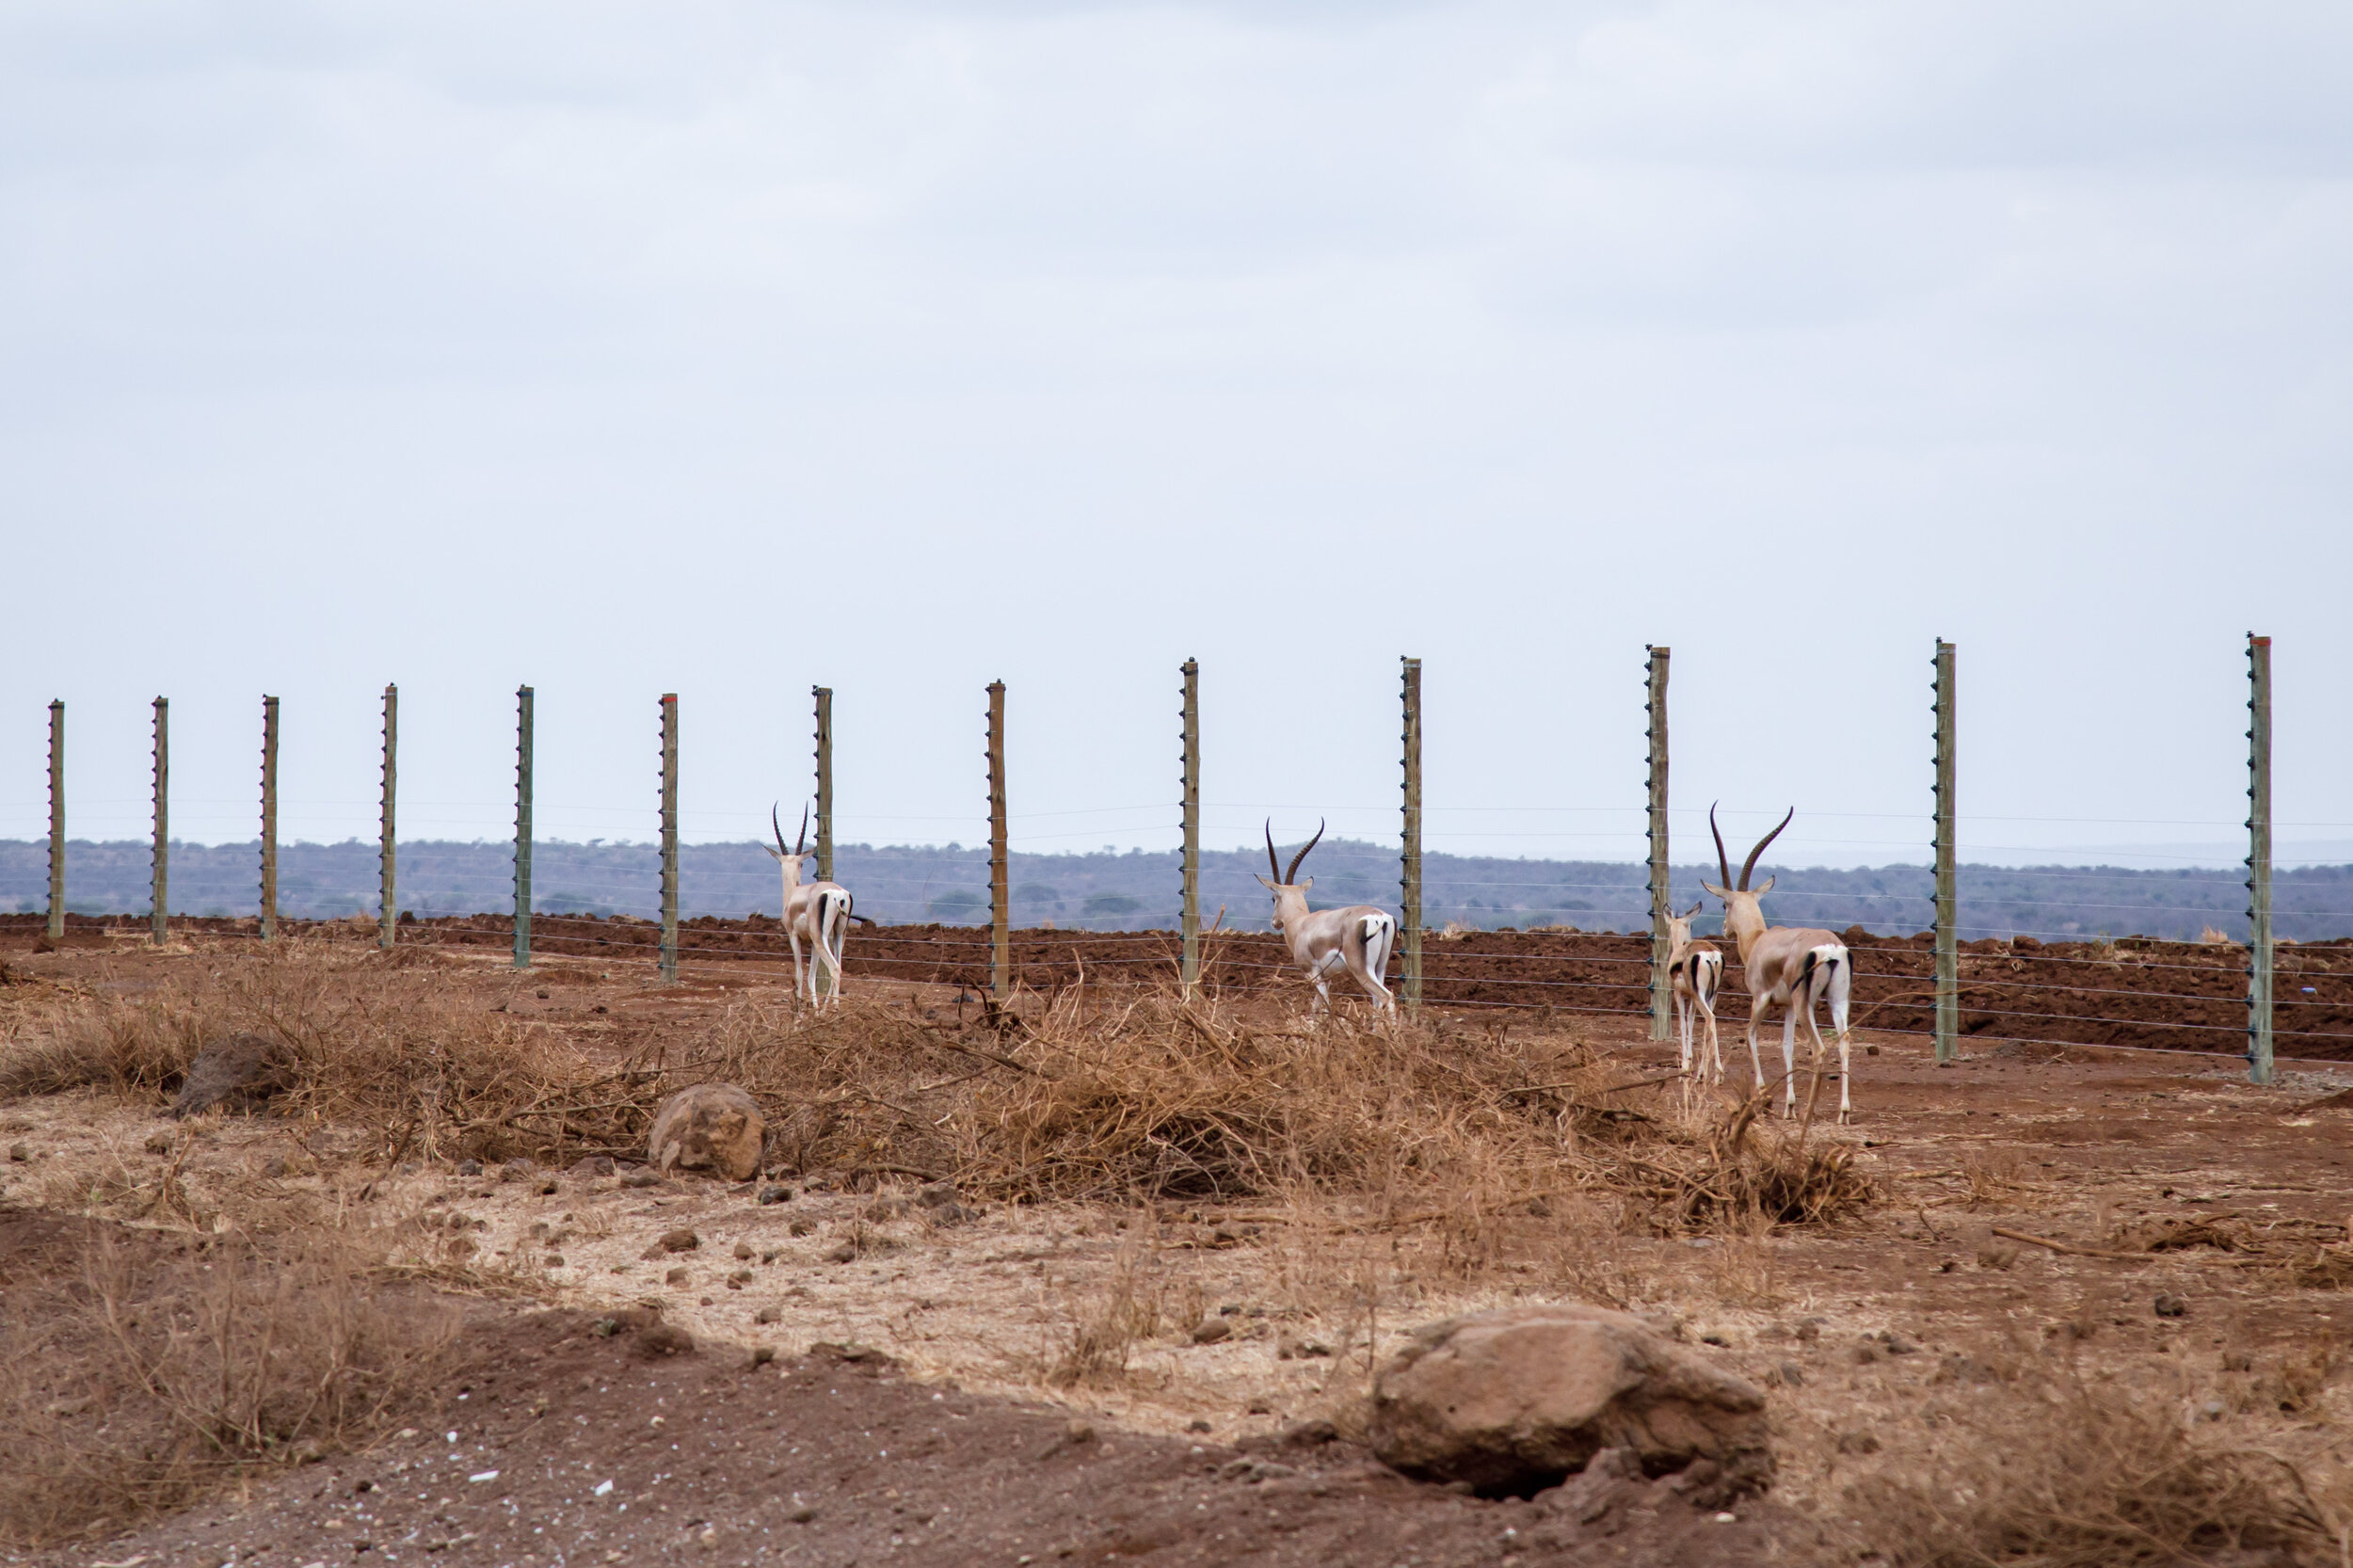 Wilder Magazine - avocados vs elephants - Amboseli Kimana KiliAvo - Kenya - Grant's Gazelles Trapped by Fence